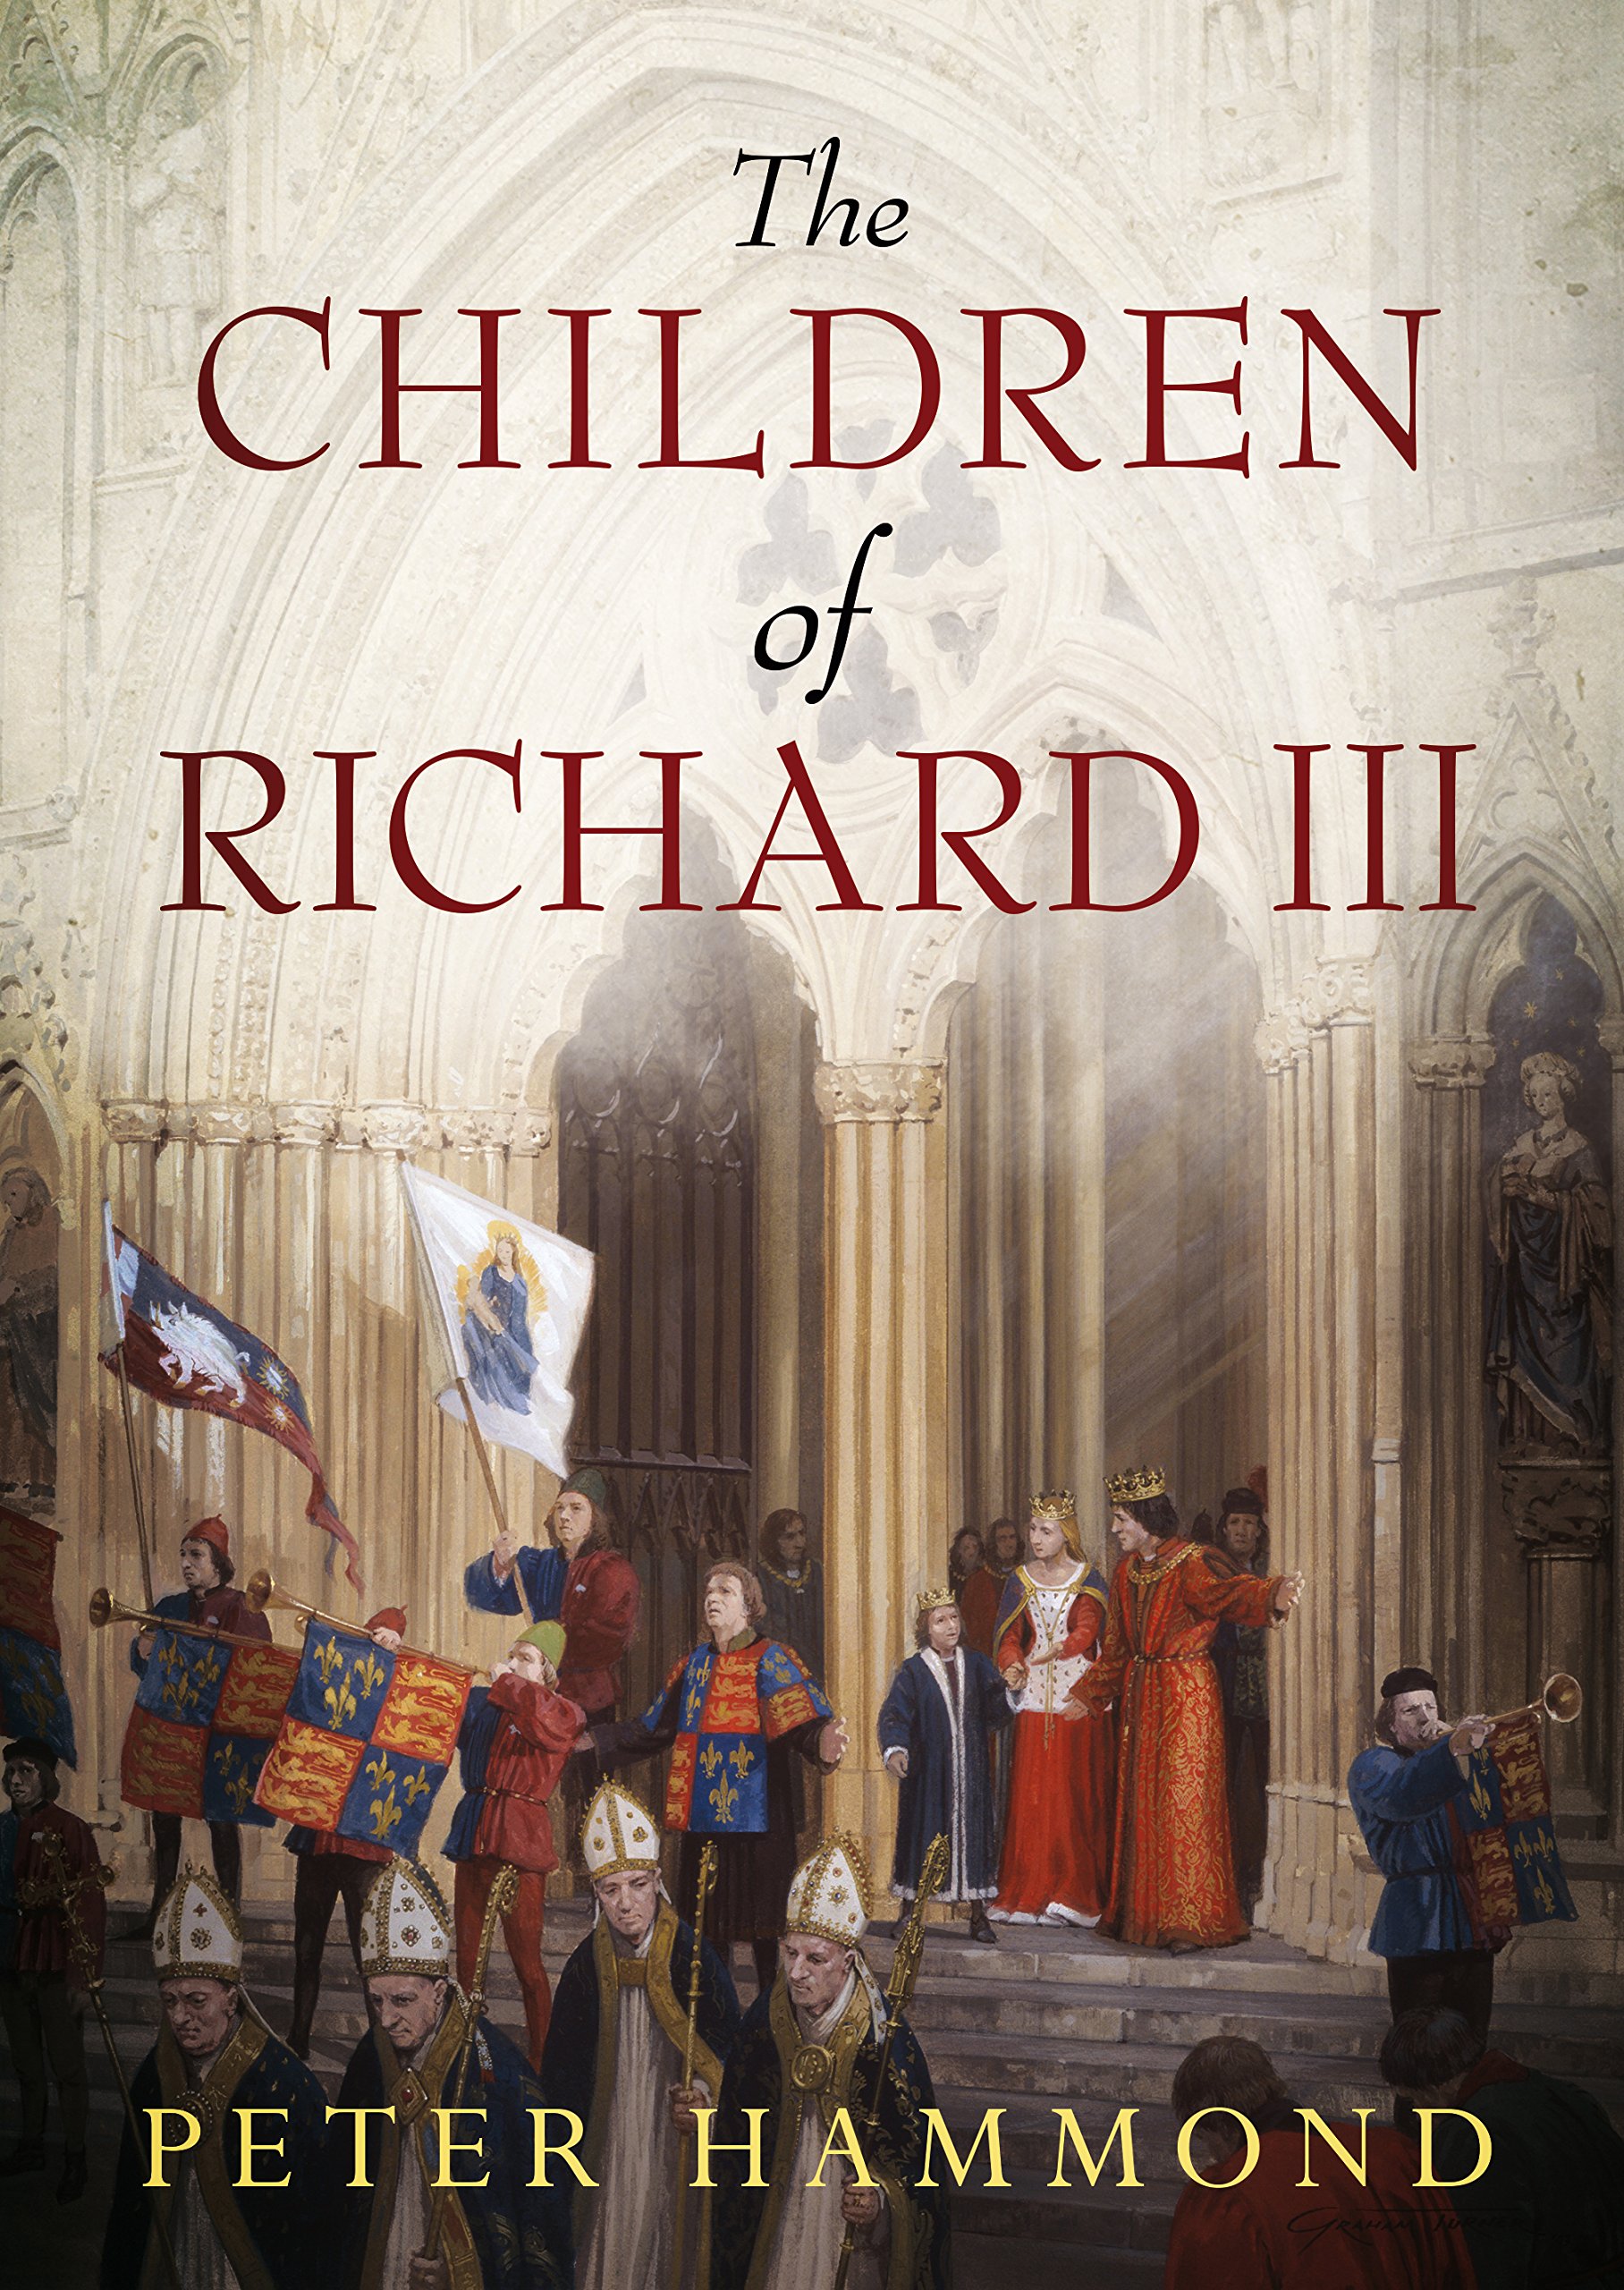 The children of Richard III